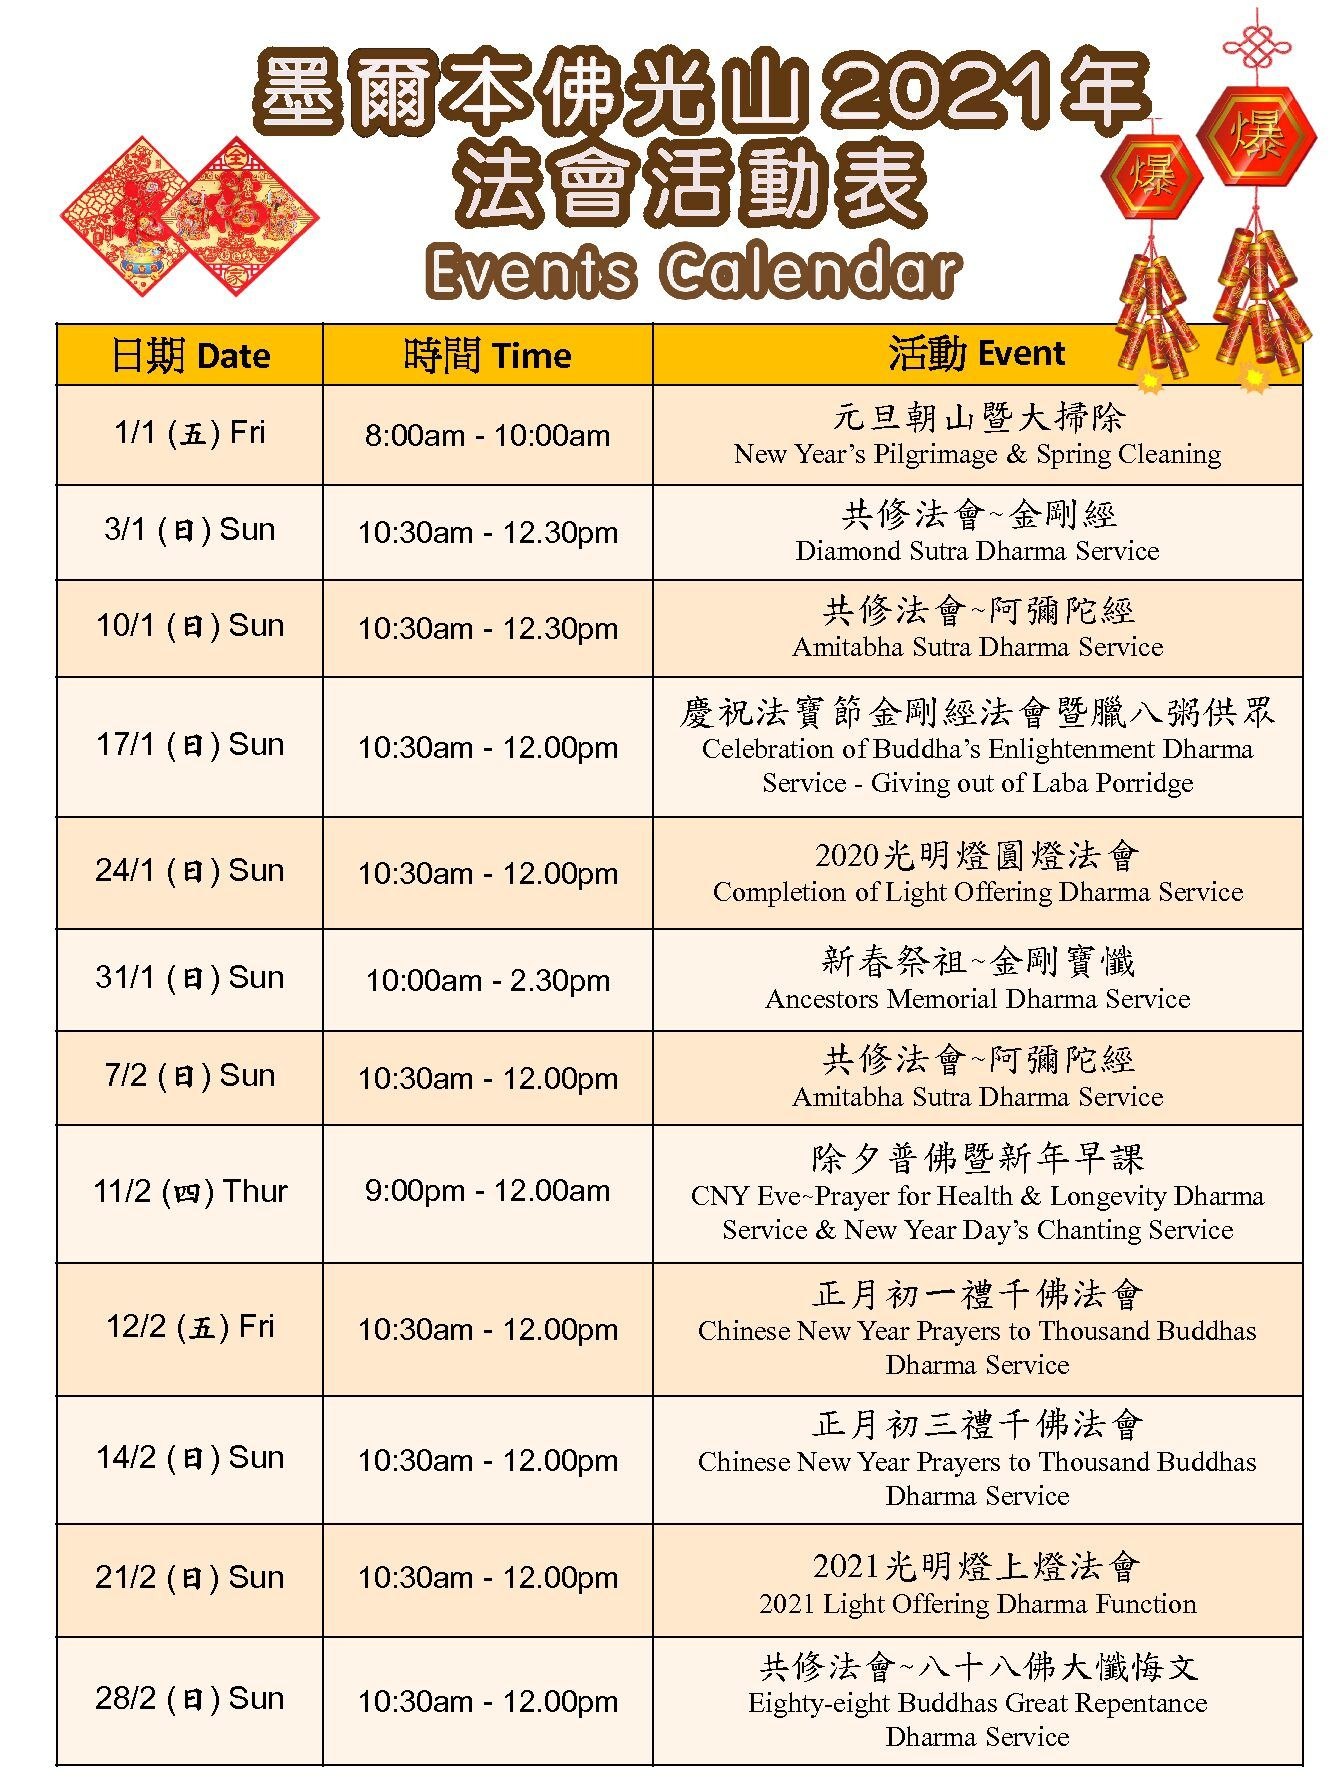 Events Calendar - Jan-Feb 2021 - Fo Guangshan Melbourne